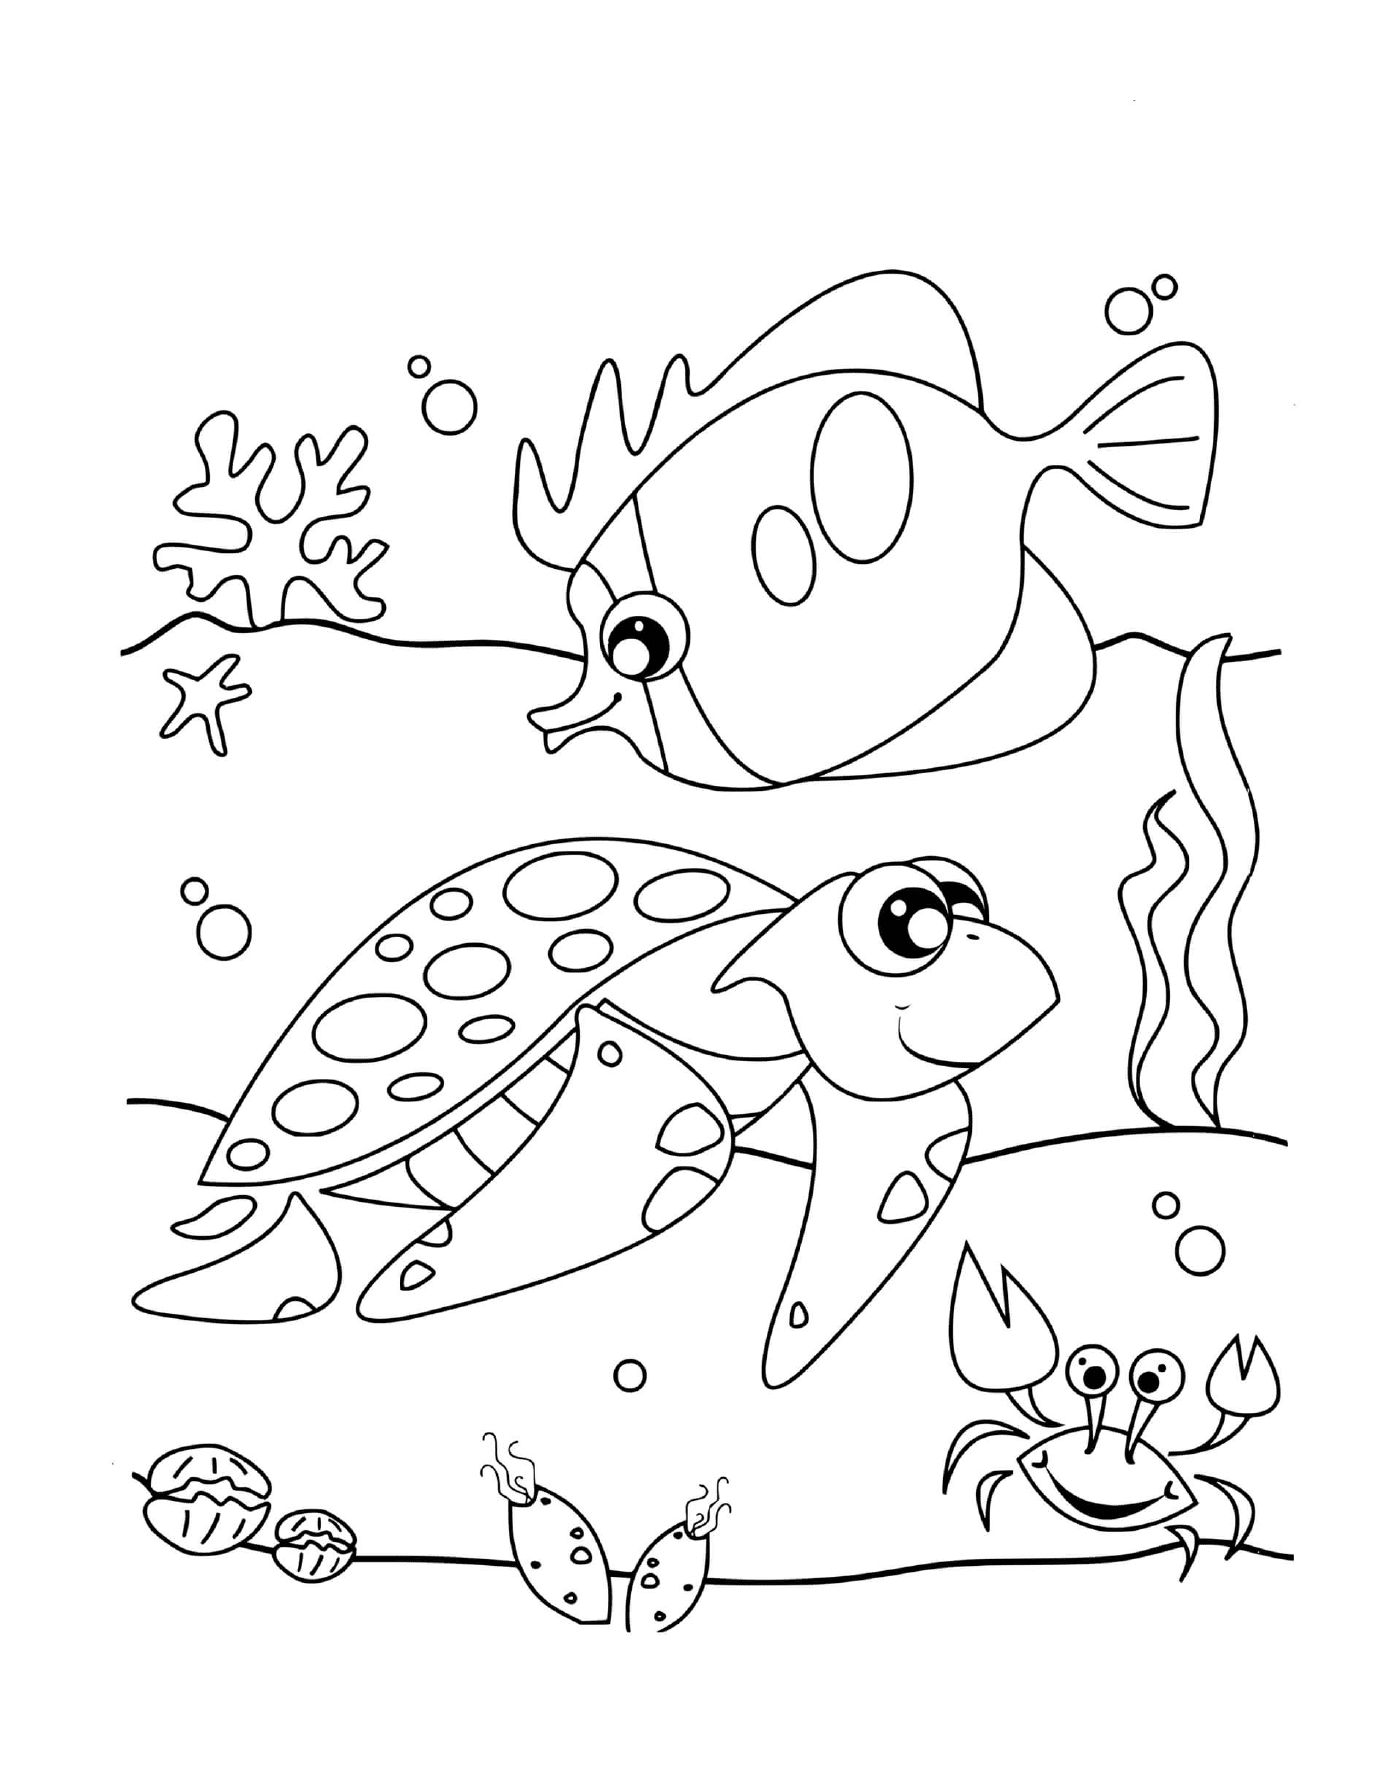  tartaruga adorável e peixe 